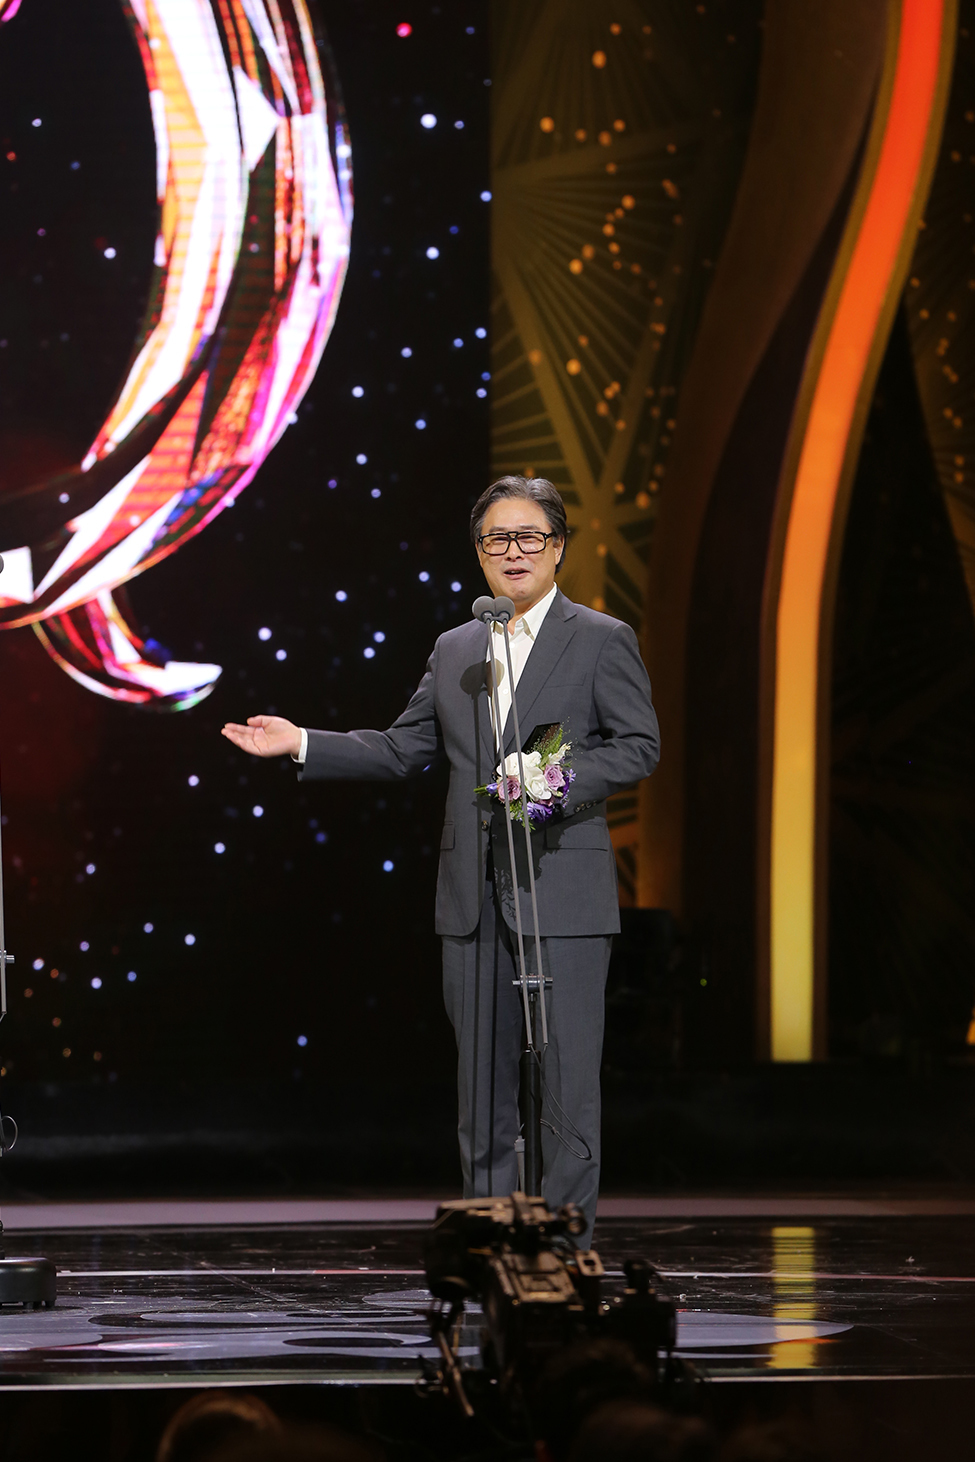 Director Park Chan-wook gives an acceptance speech, winning the Best Mini Series with “The Little Drummer Girl